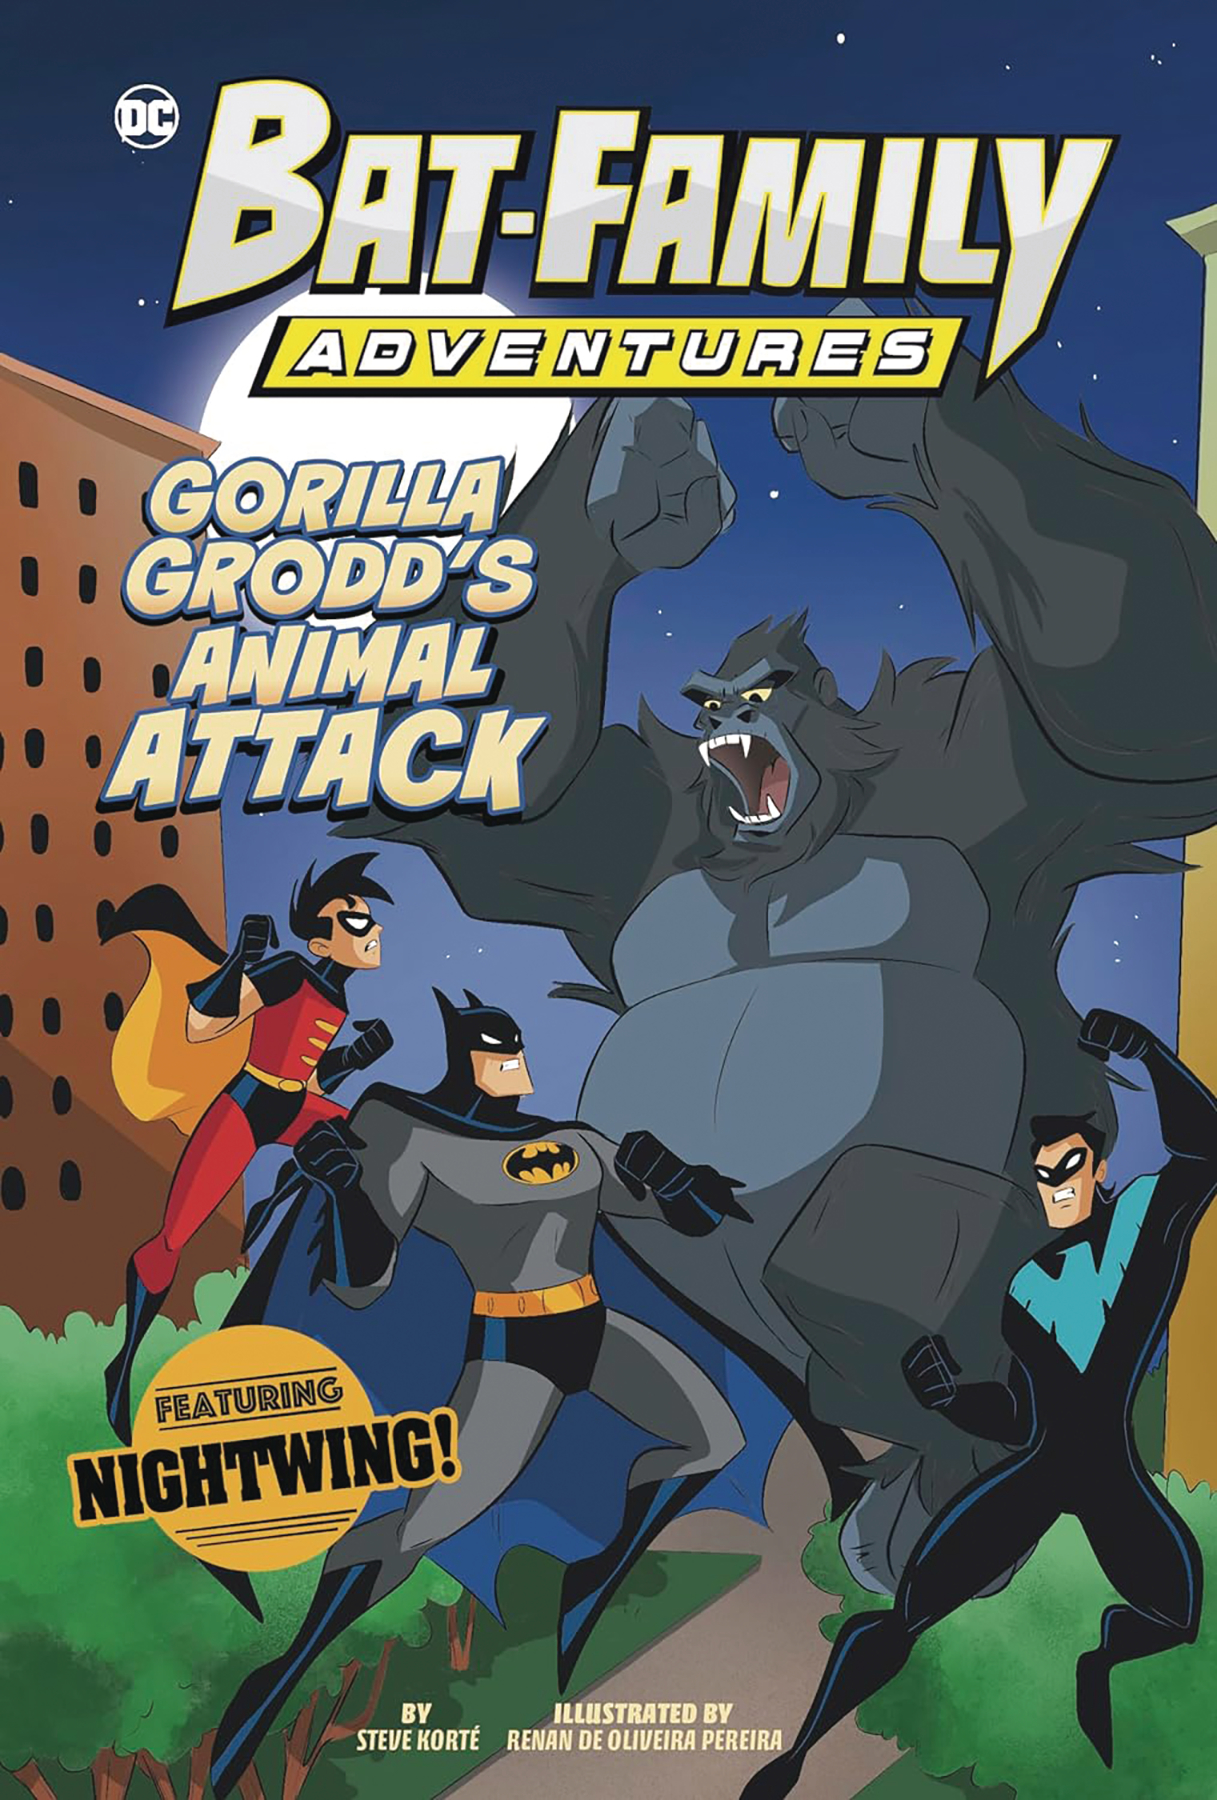 Bat Family Adventure #2 Gorilla Grodds Animal Attack